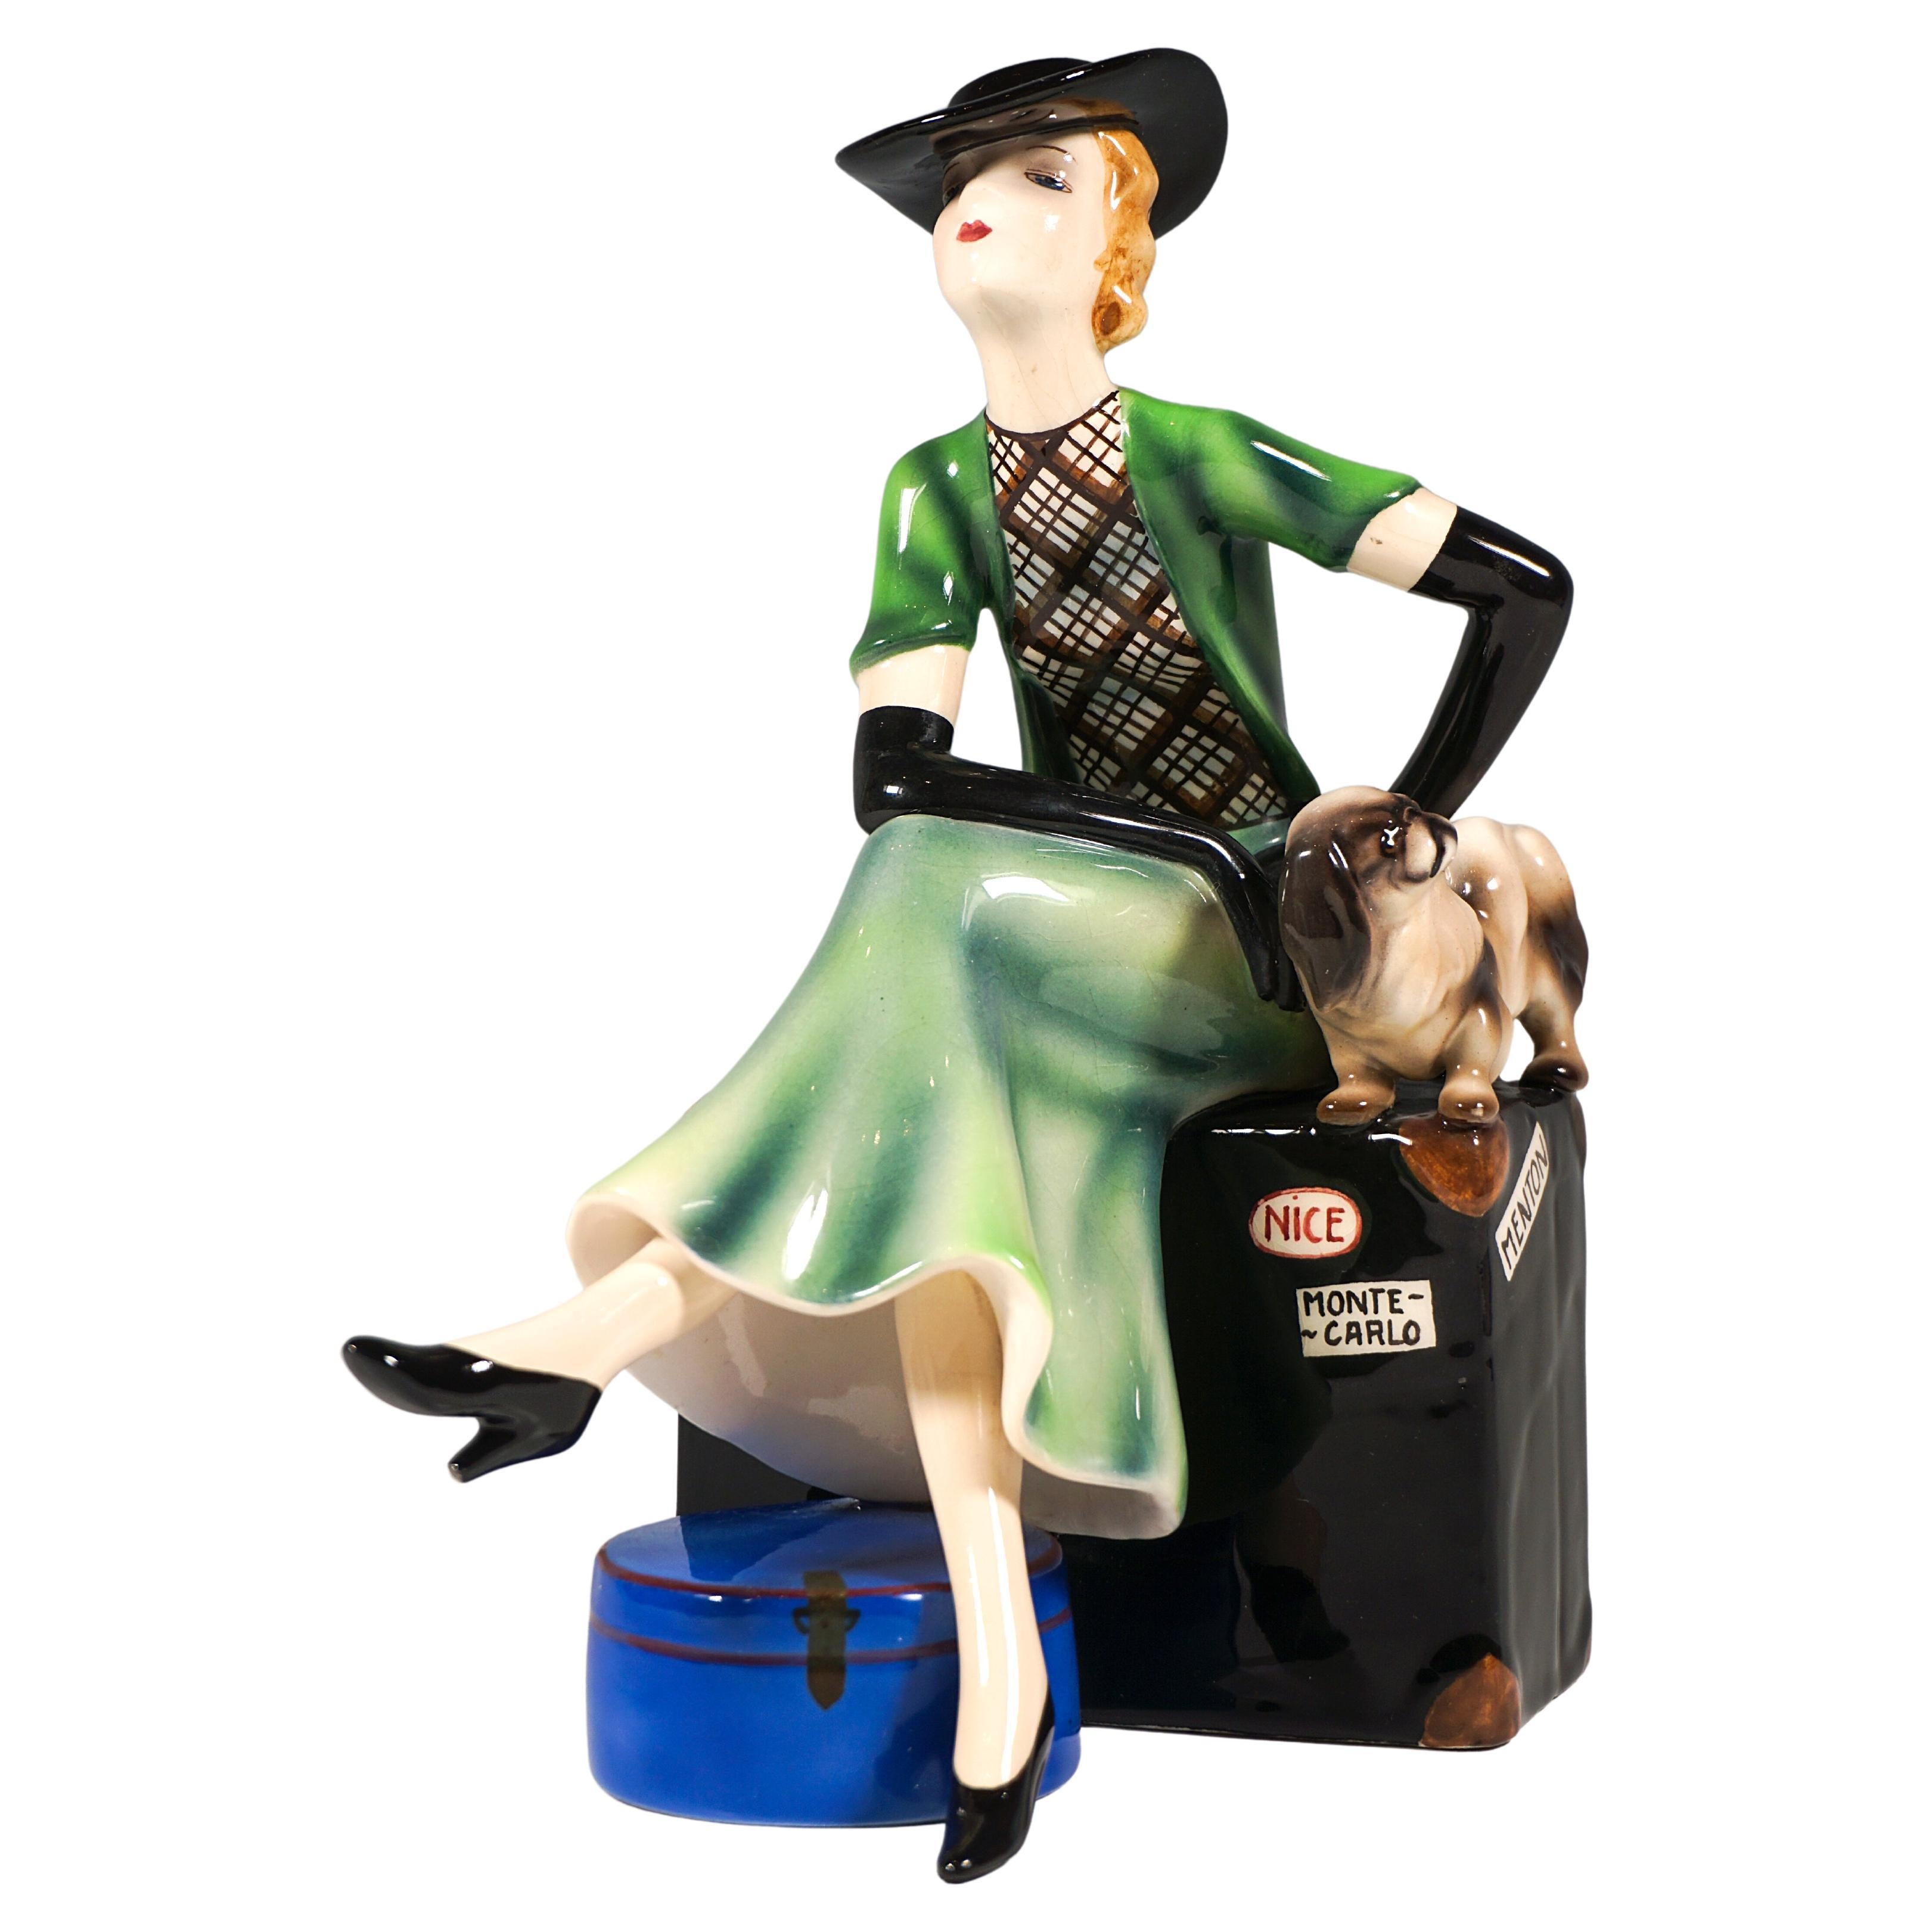 Goldscheider Vienna Lady With Pekingese Sitting On A Suitcase, Dakon, Circa 1936 For Sale